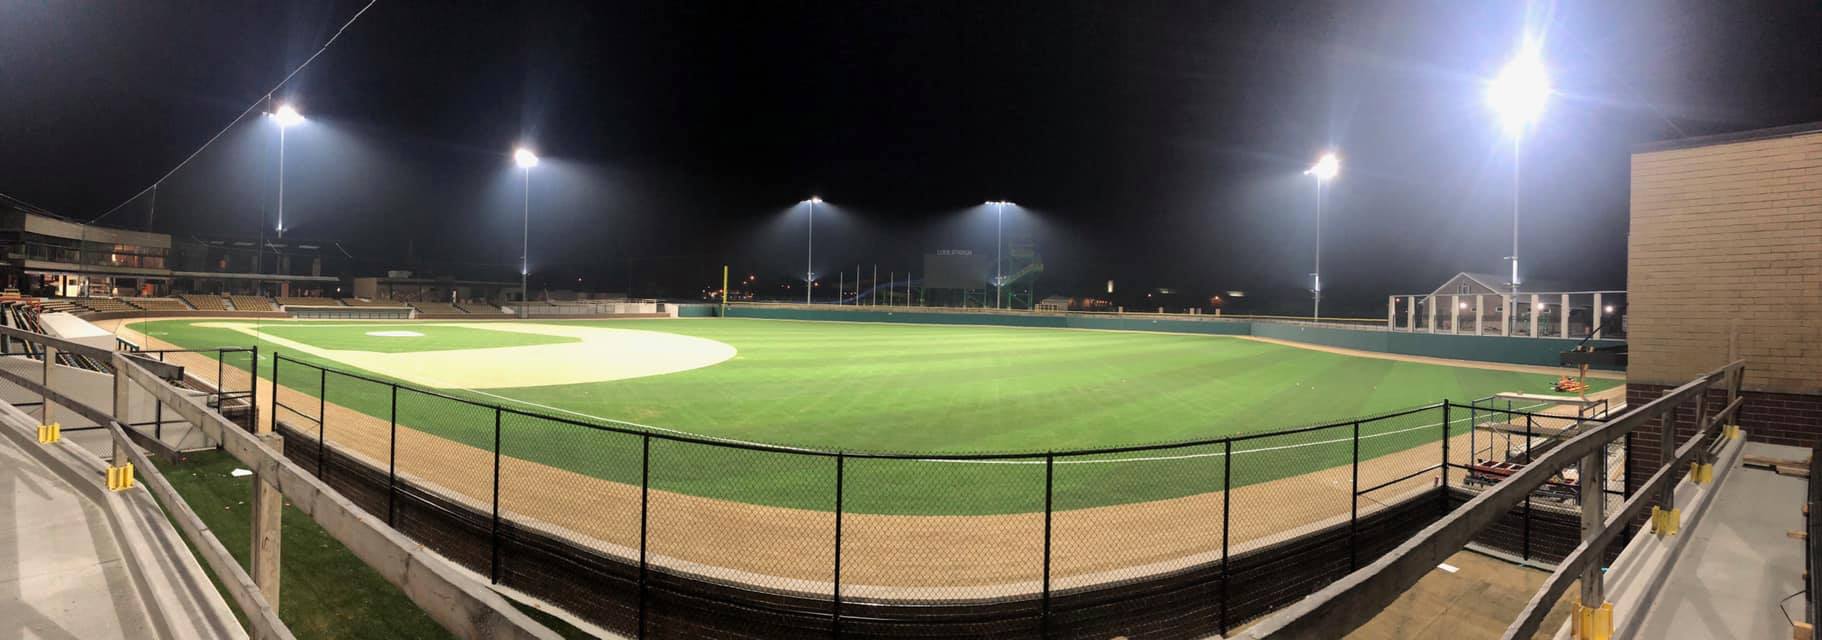 Loeb Stadium Baseball Field in Lafayette Indiana